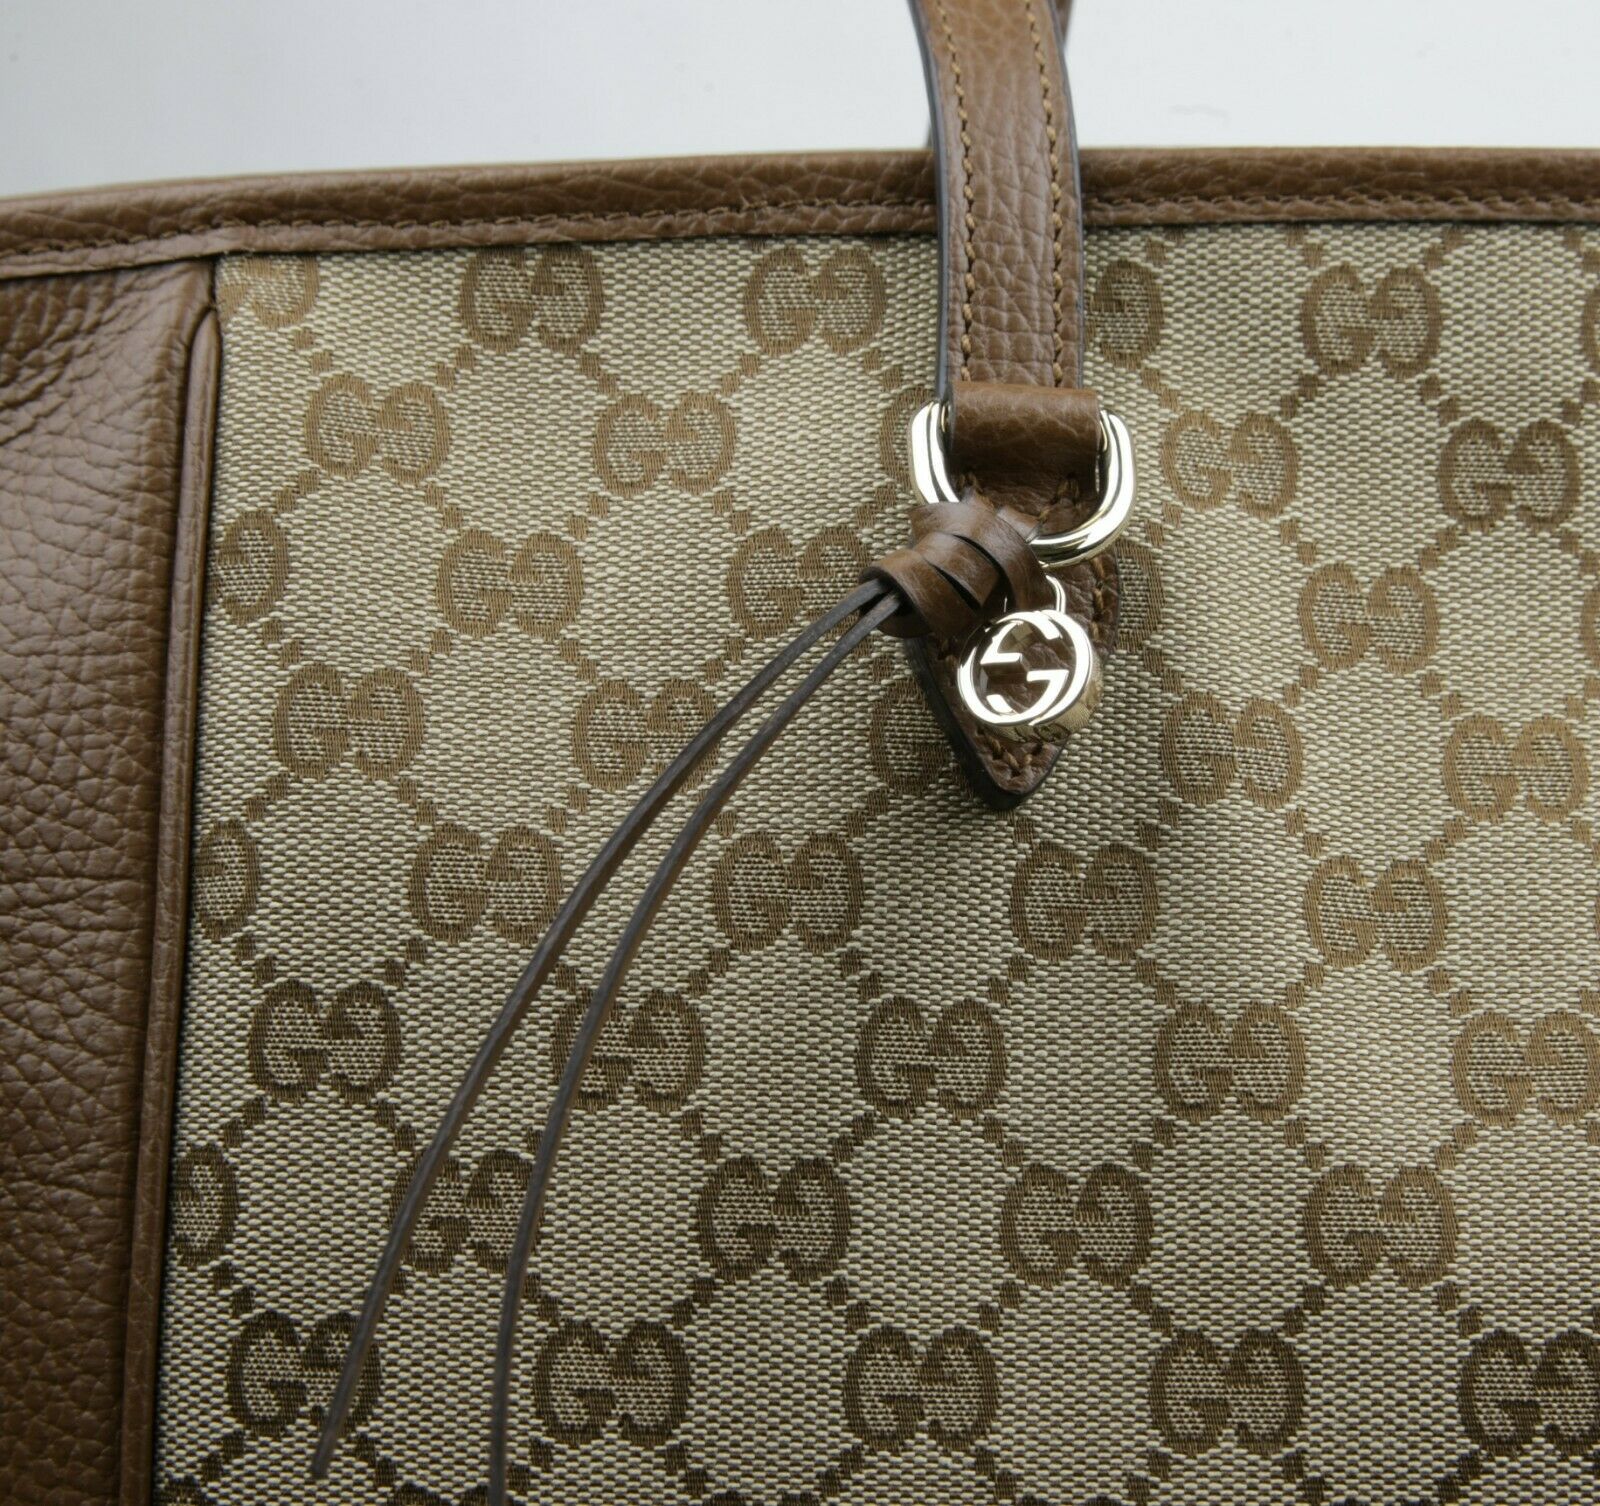 Brown Jumbo GG mini canvas and leather tote bag